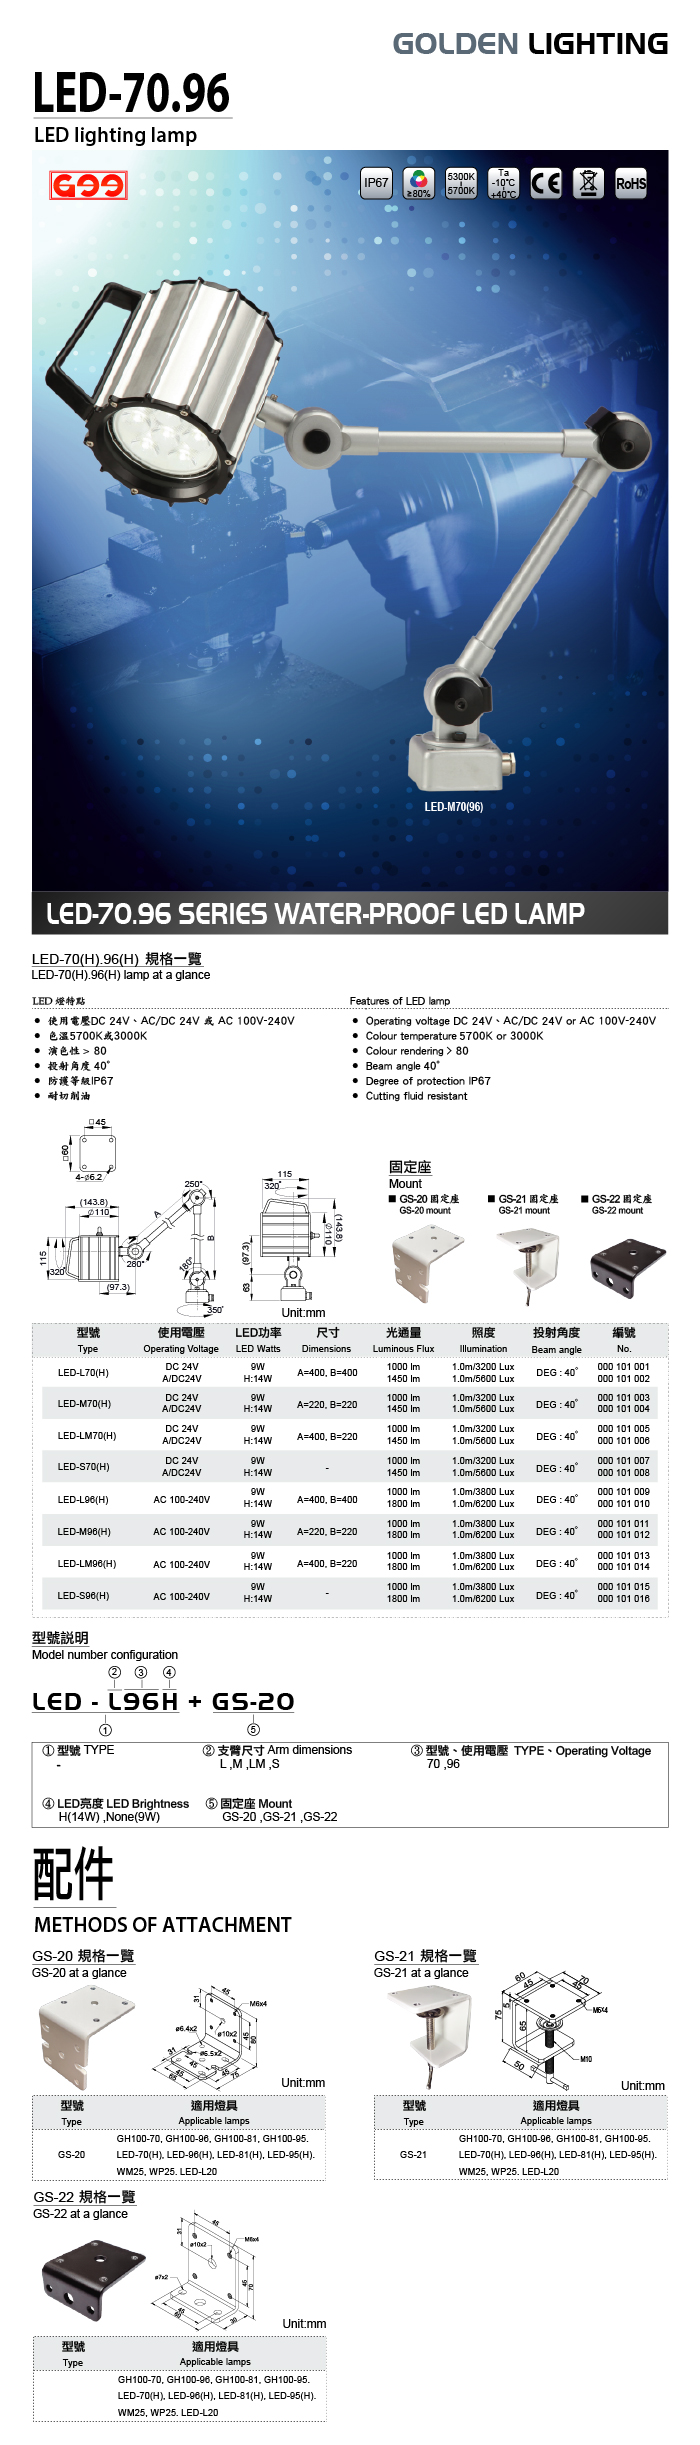 LED-96、LED-70 WATER-PROOF LED LIGHTING LAMP